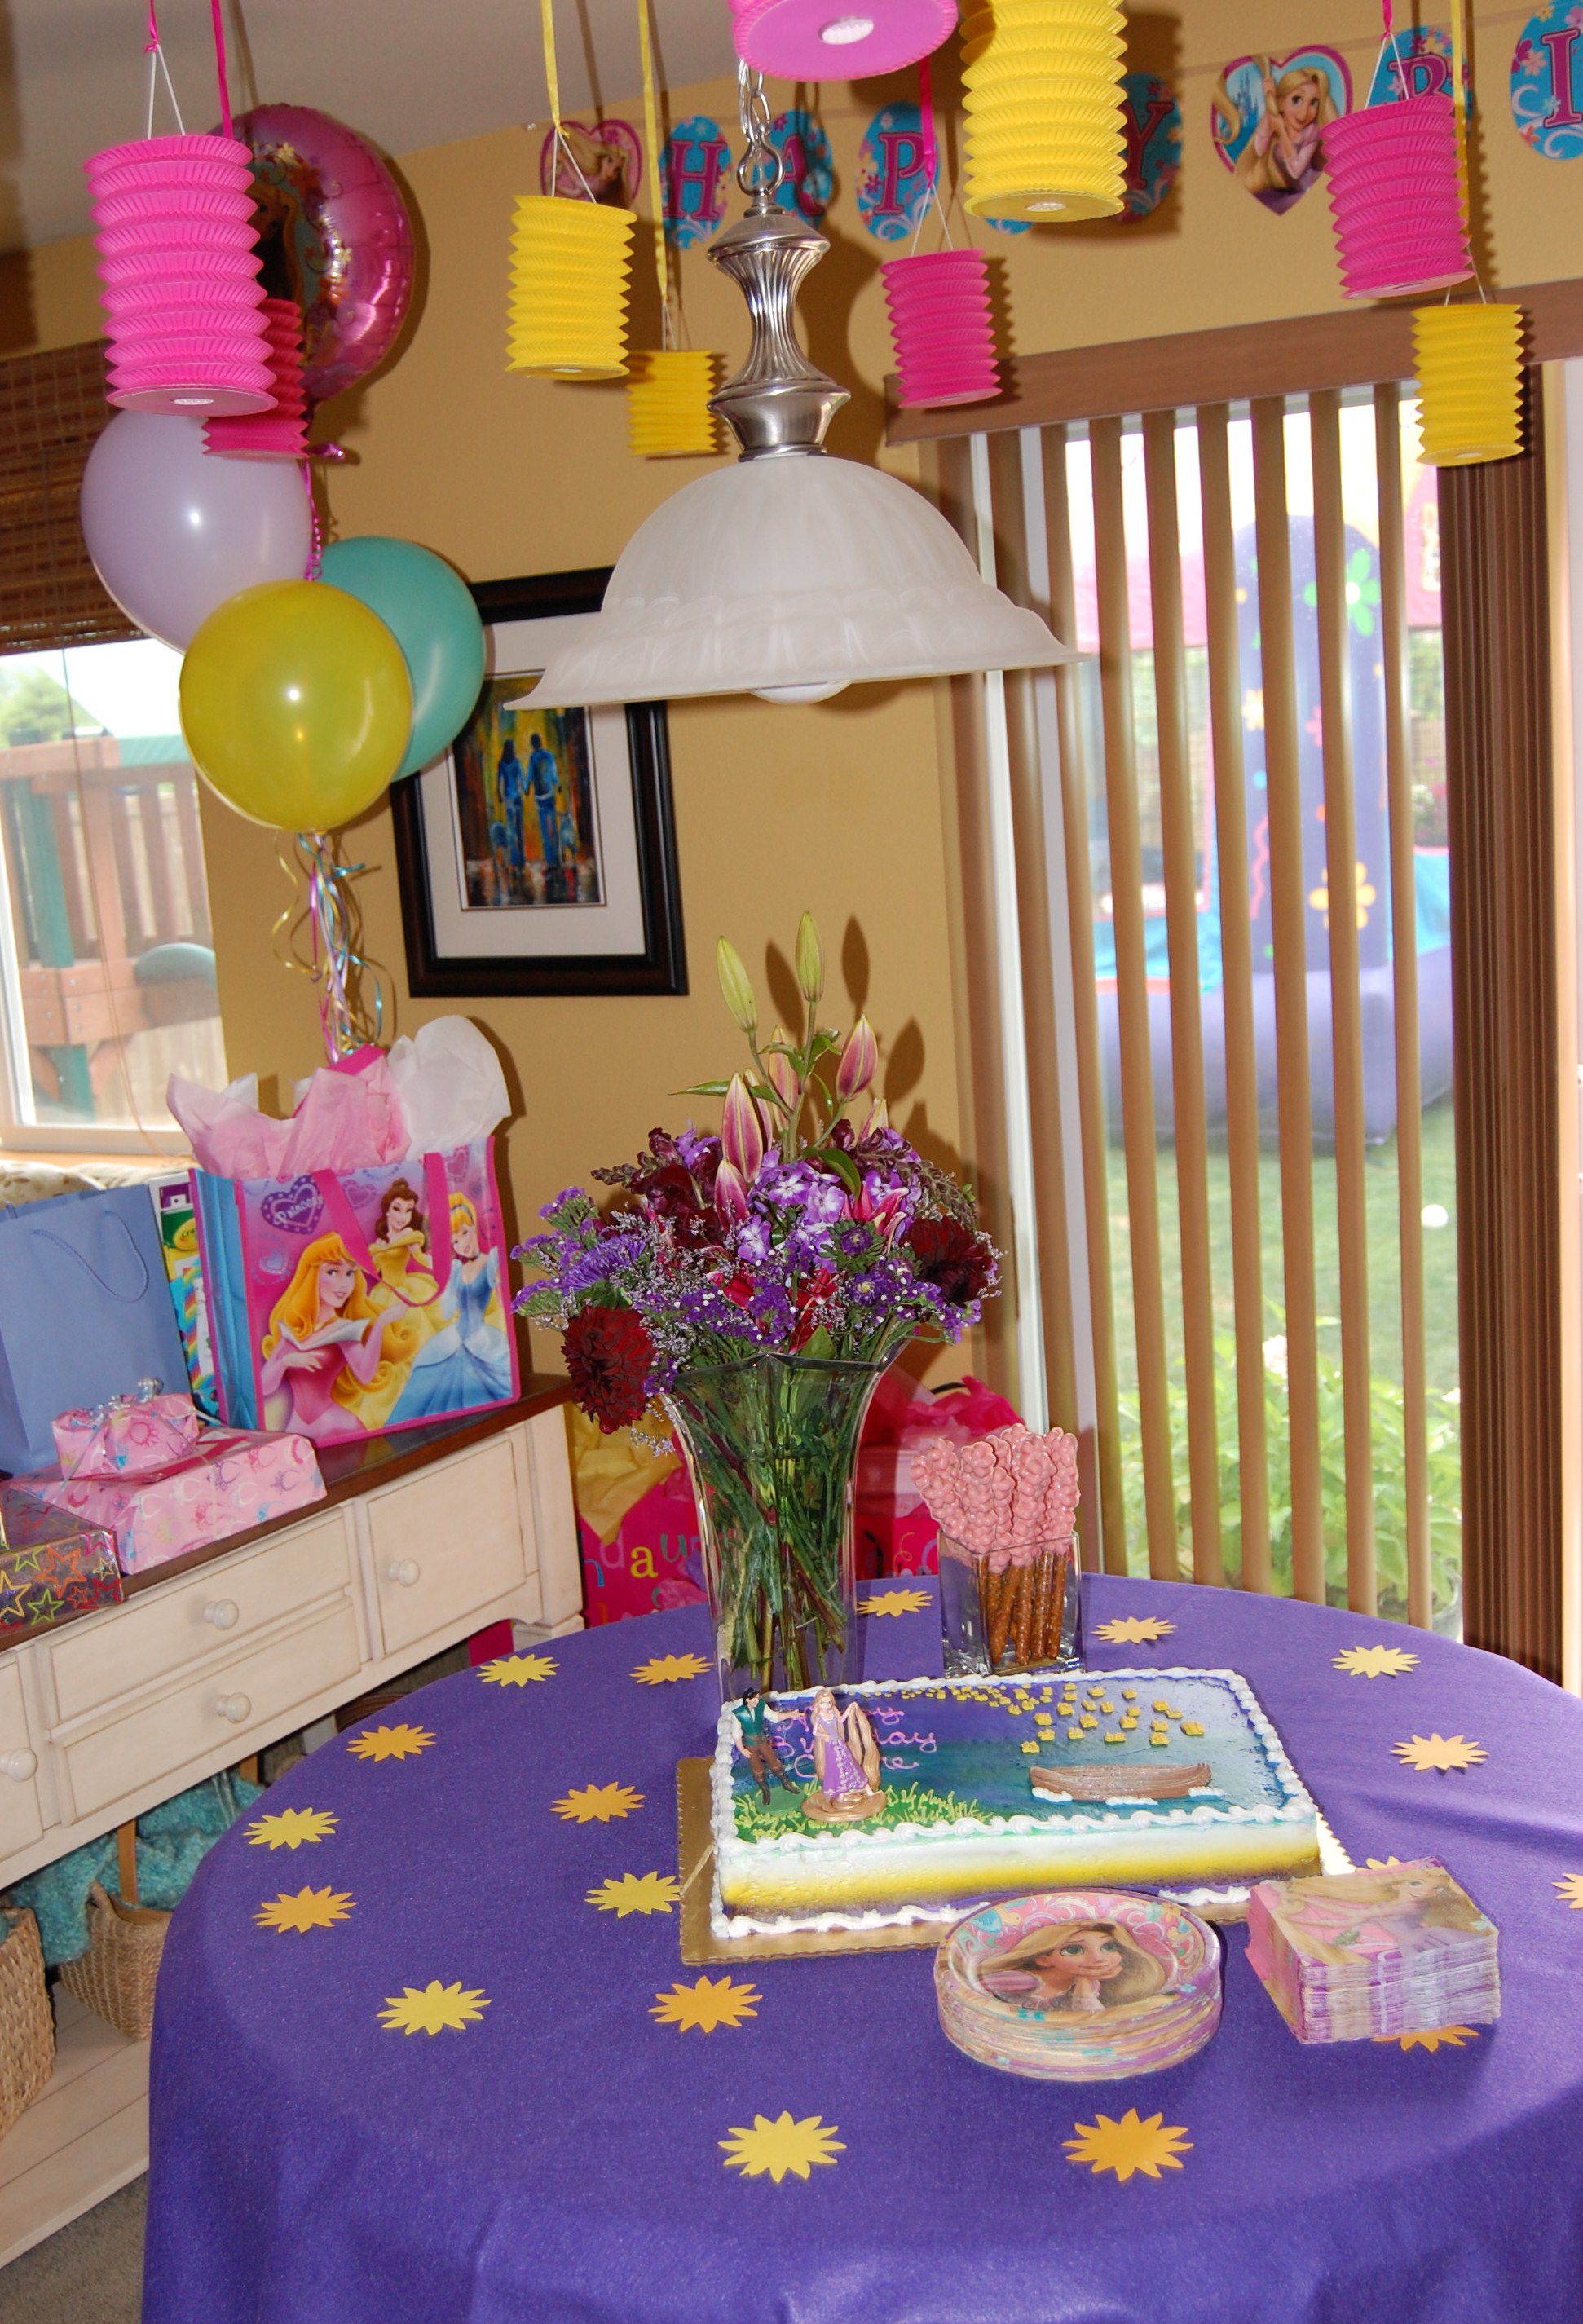 Tangled Birthday decorations – Katy Upperman ~ Author